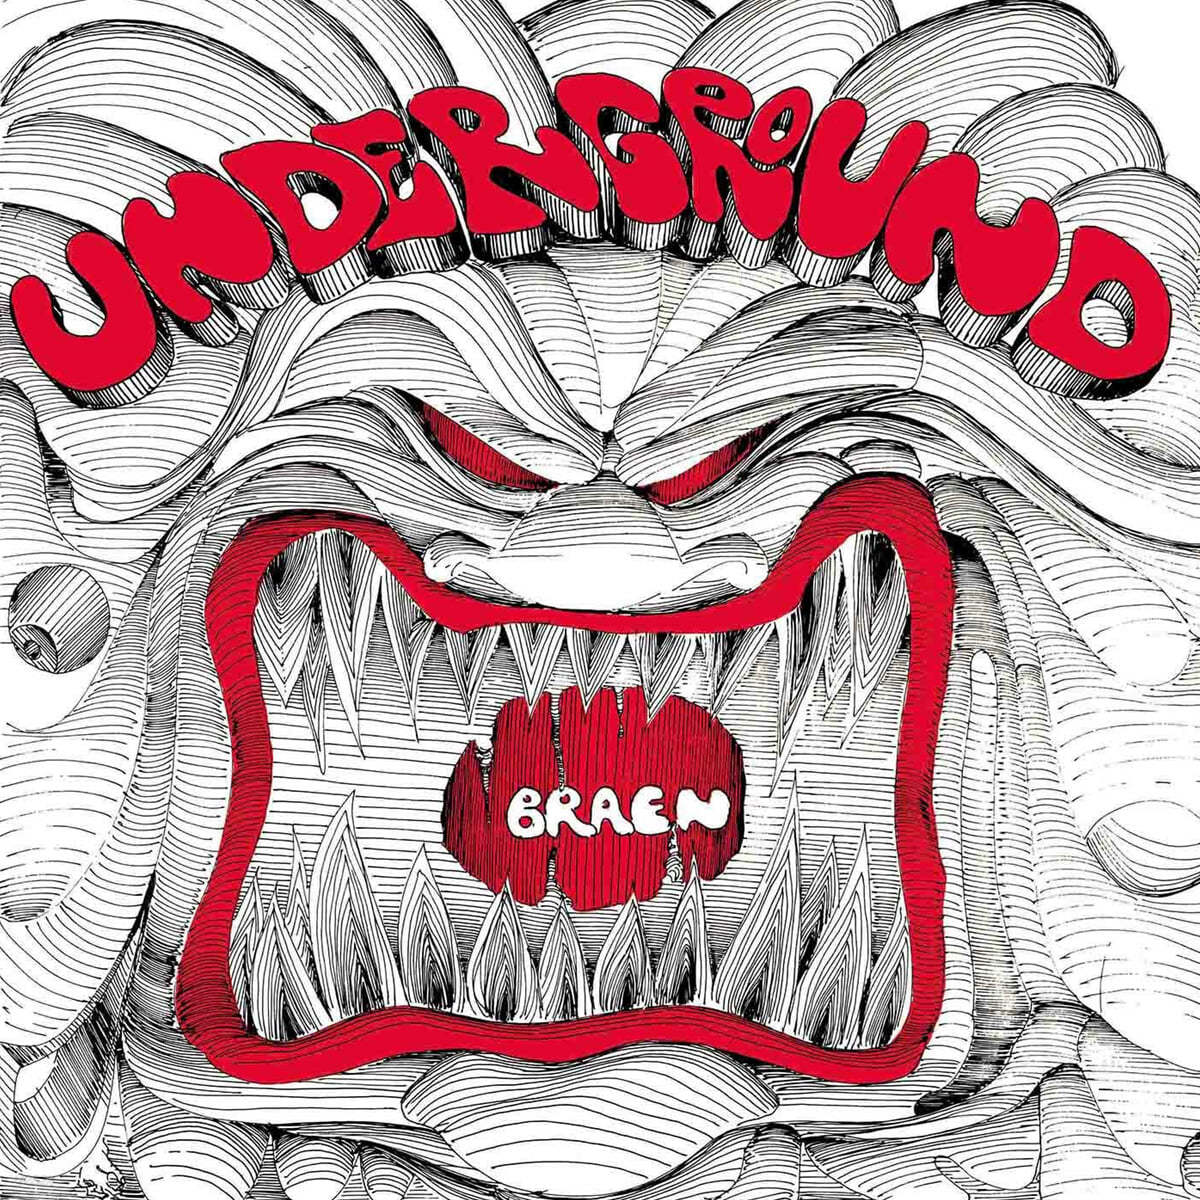 The Braen's Machine (브라앤즈 머신) - Underground 